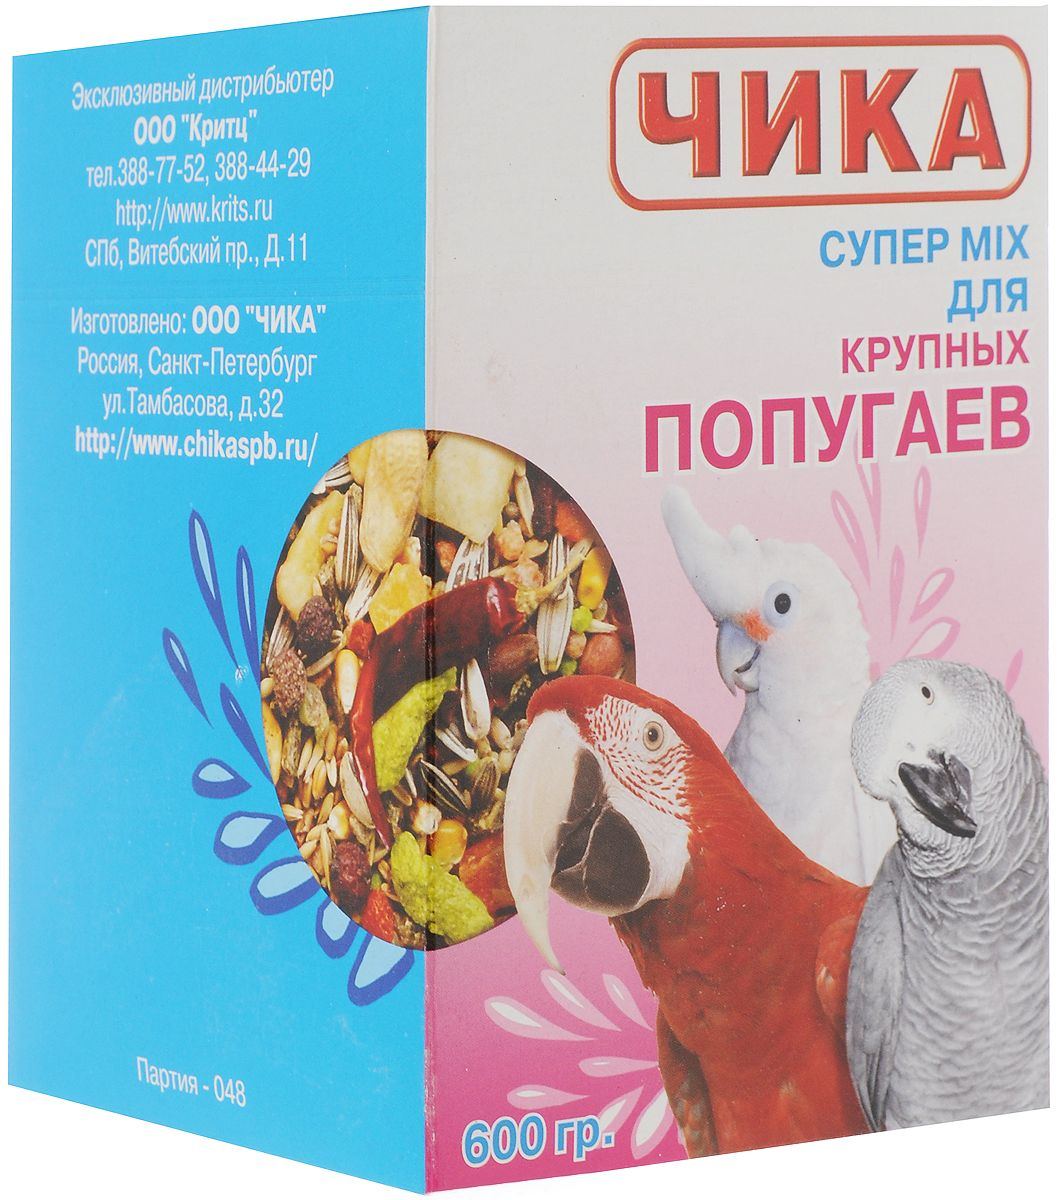 [142.003а] Чика Супер-MIX корм для крупных попугаев 600гр